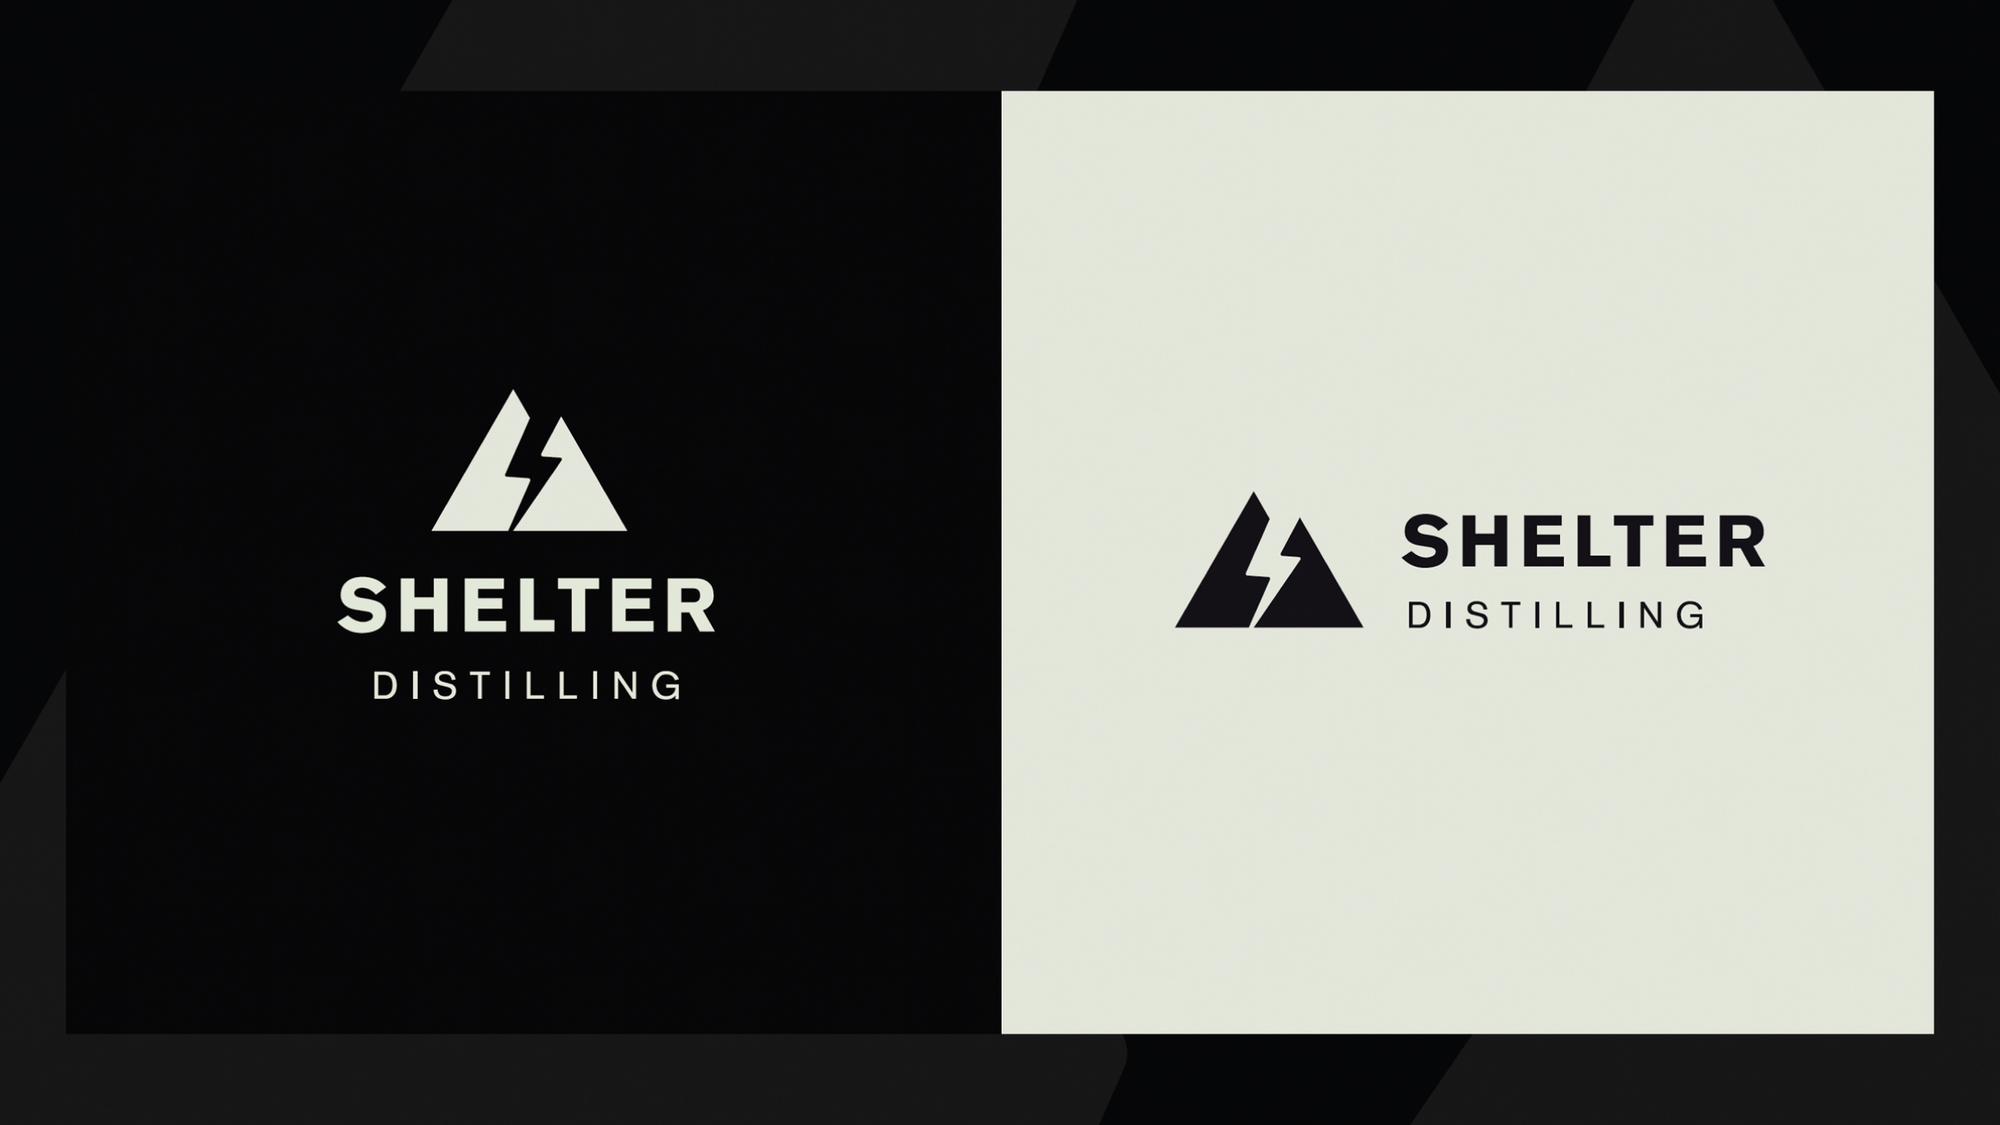 Shelter Distilling logos - on a dark and light background